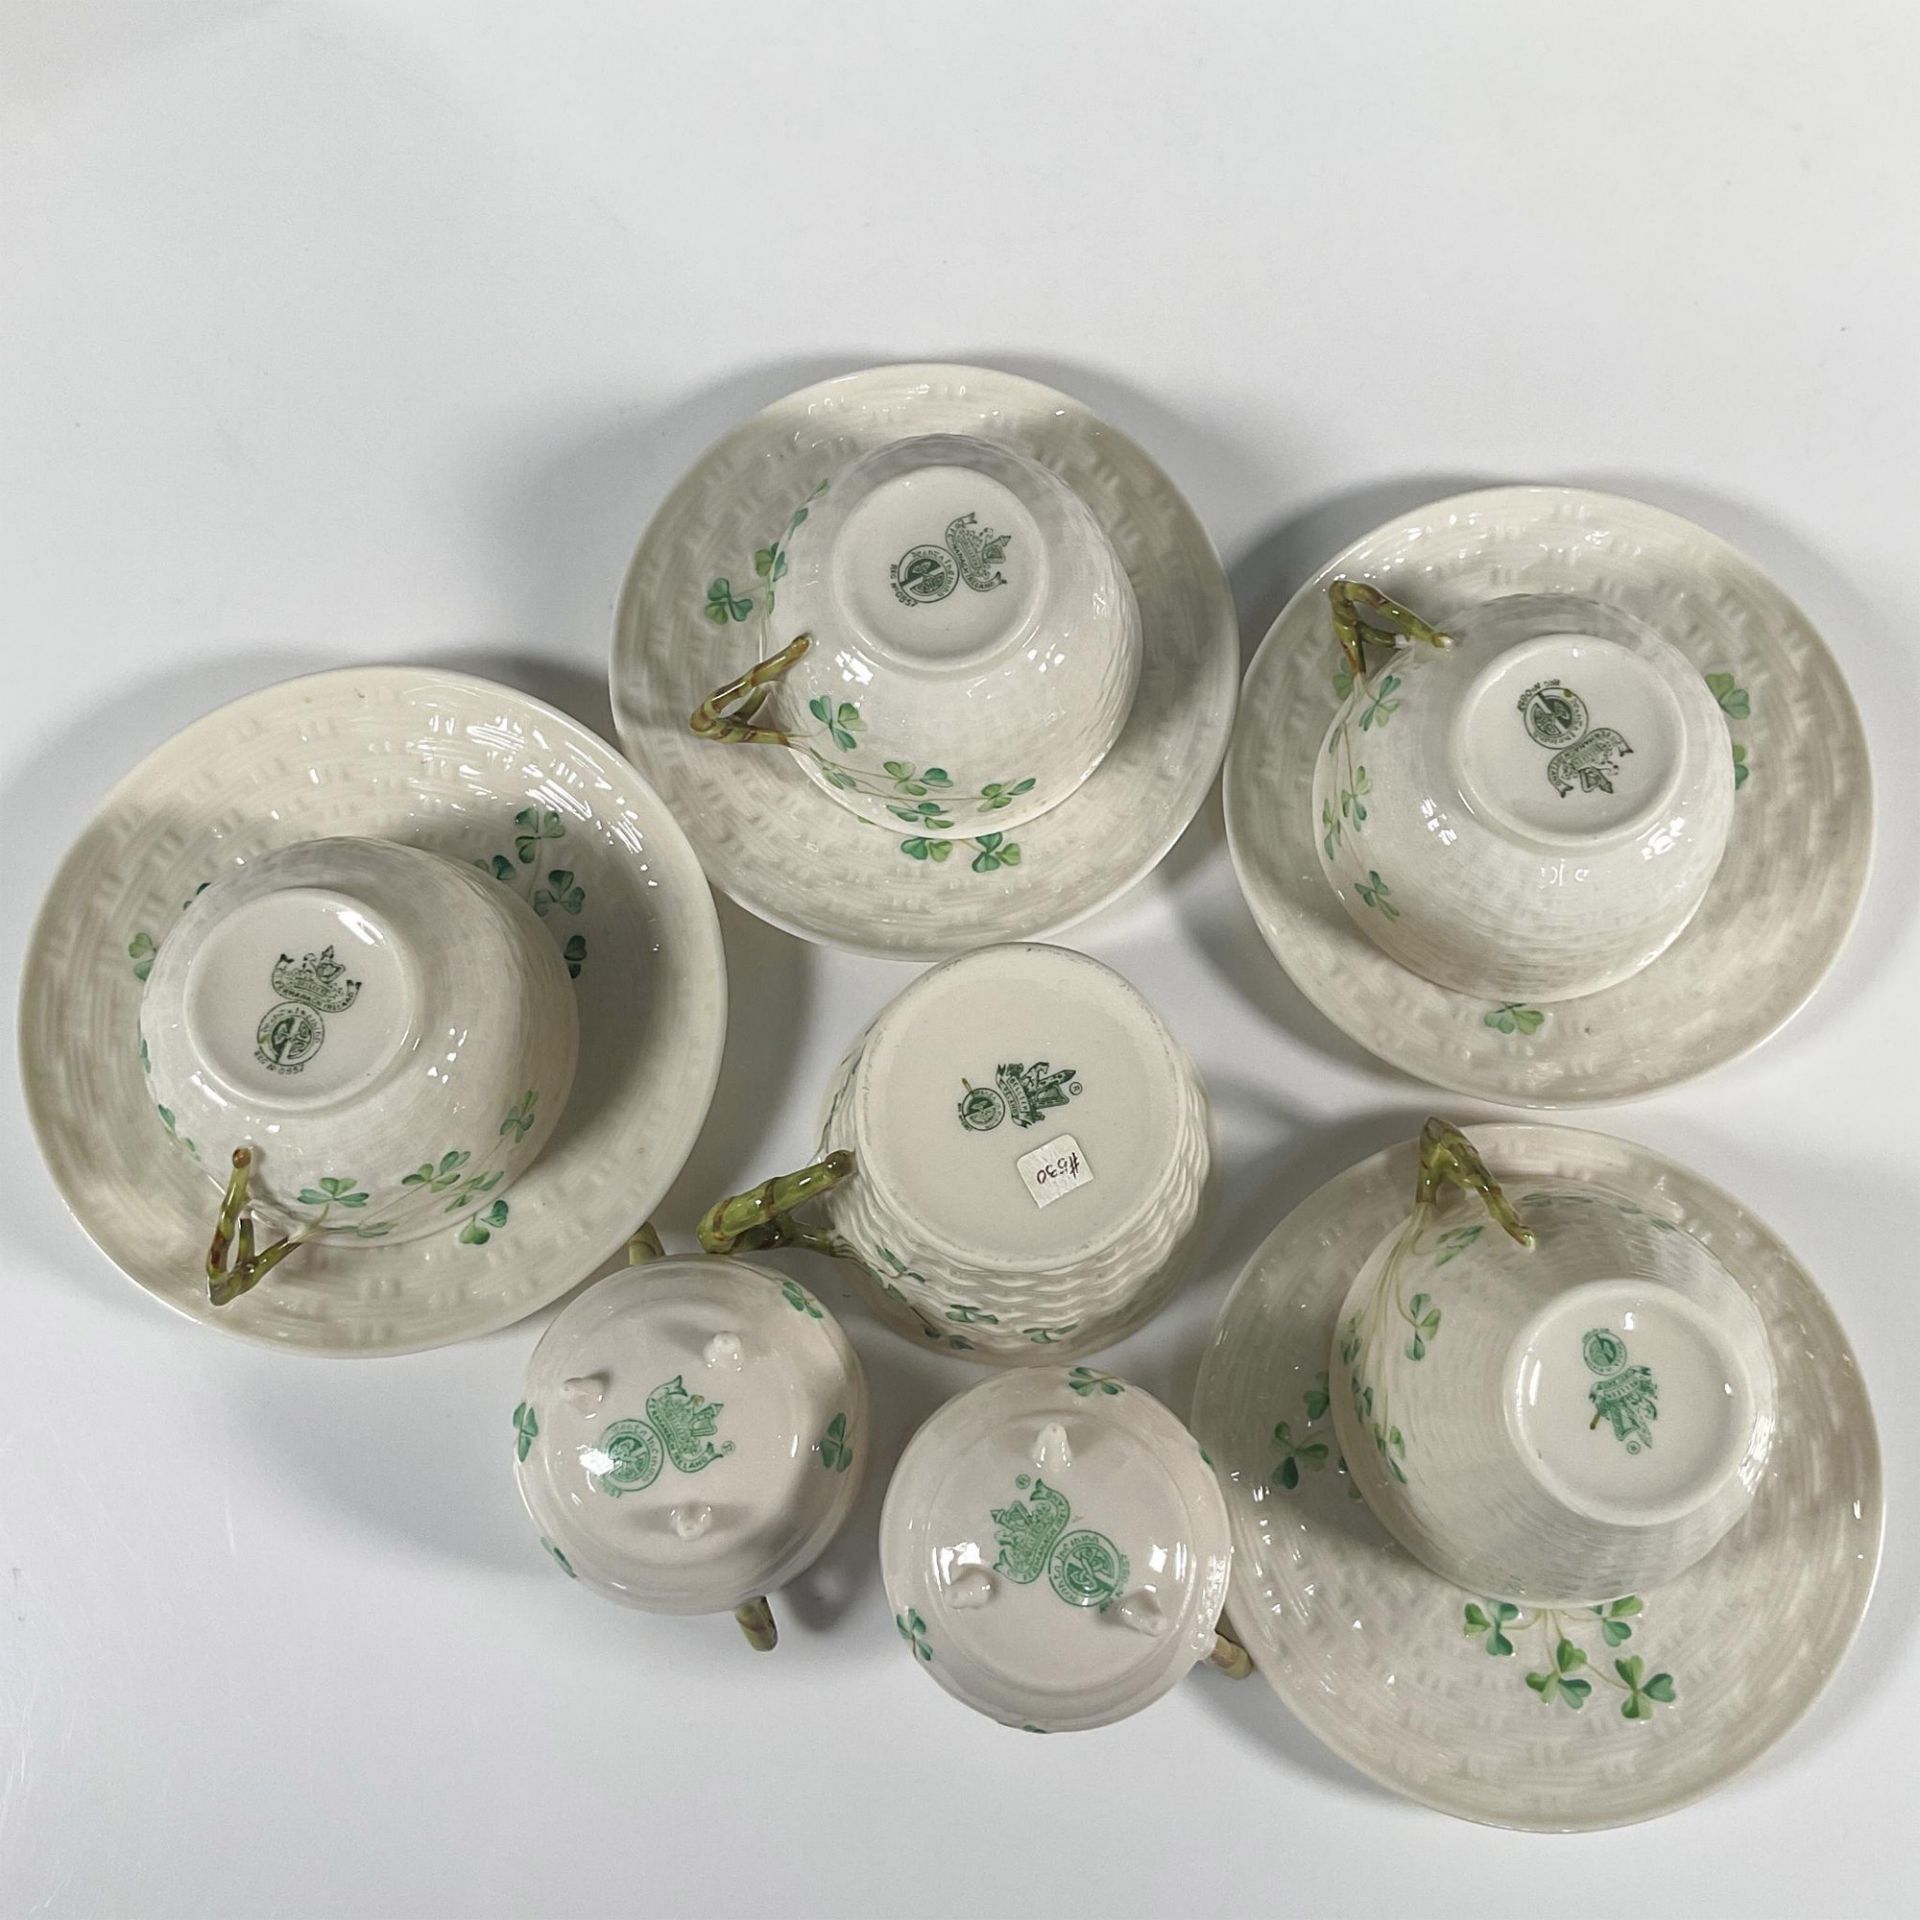 11pc Belleek Pottery Porcelain Tea Set, Shamrock - Image 3 of 3